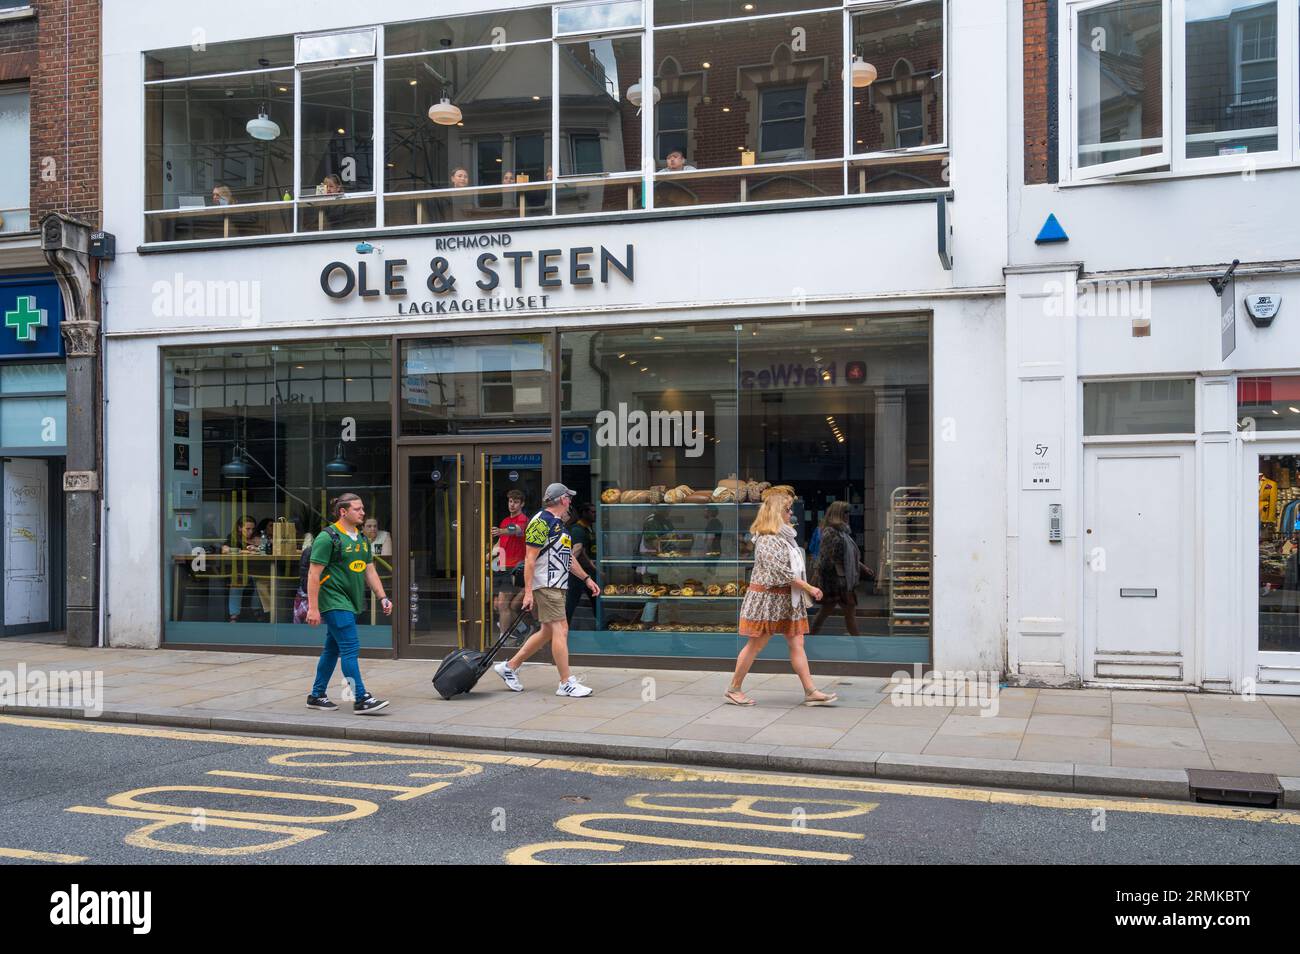 Ole & Steen, a Danish bakery, restaurant and coffee shop on George Street, Richmond, London, England, UK Stock Photo